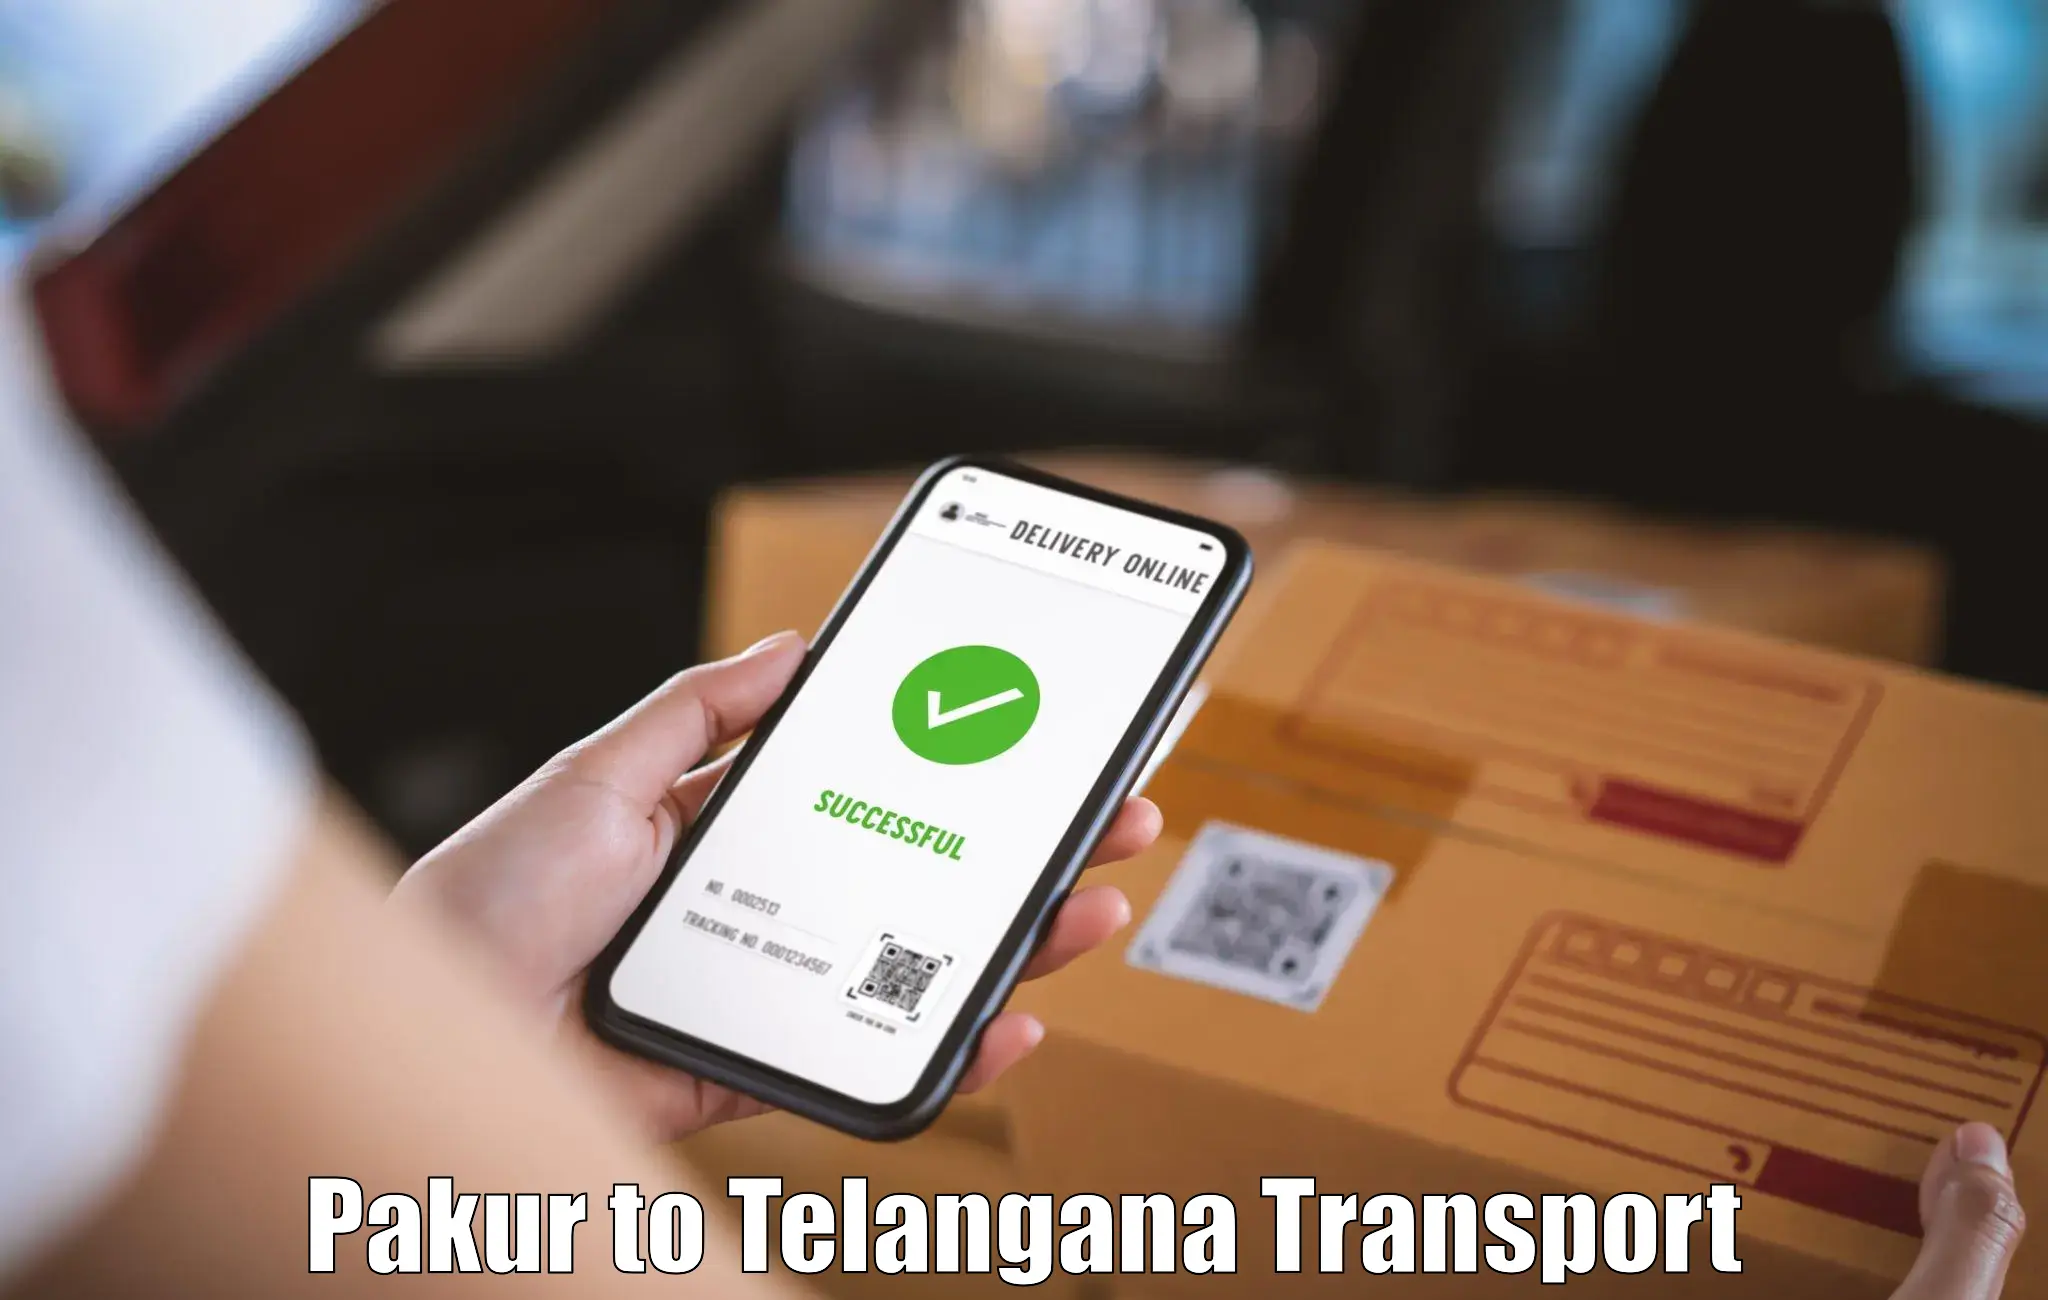 Transport shared services Pakur to Yerrupalem